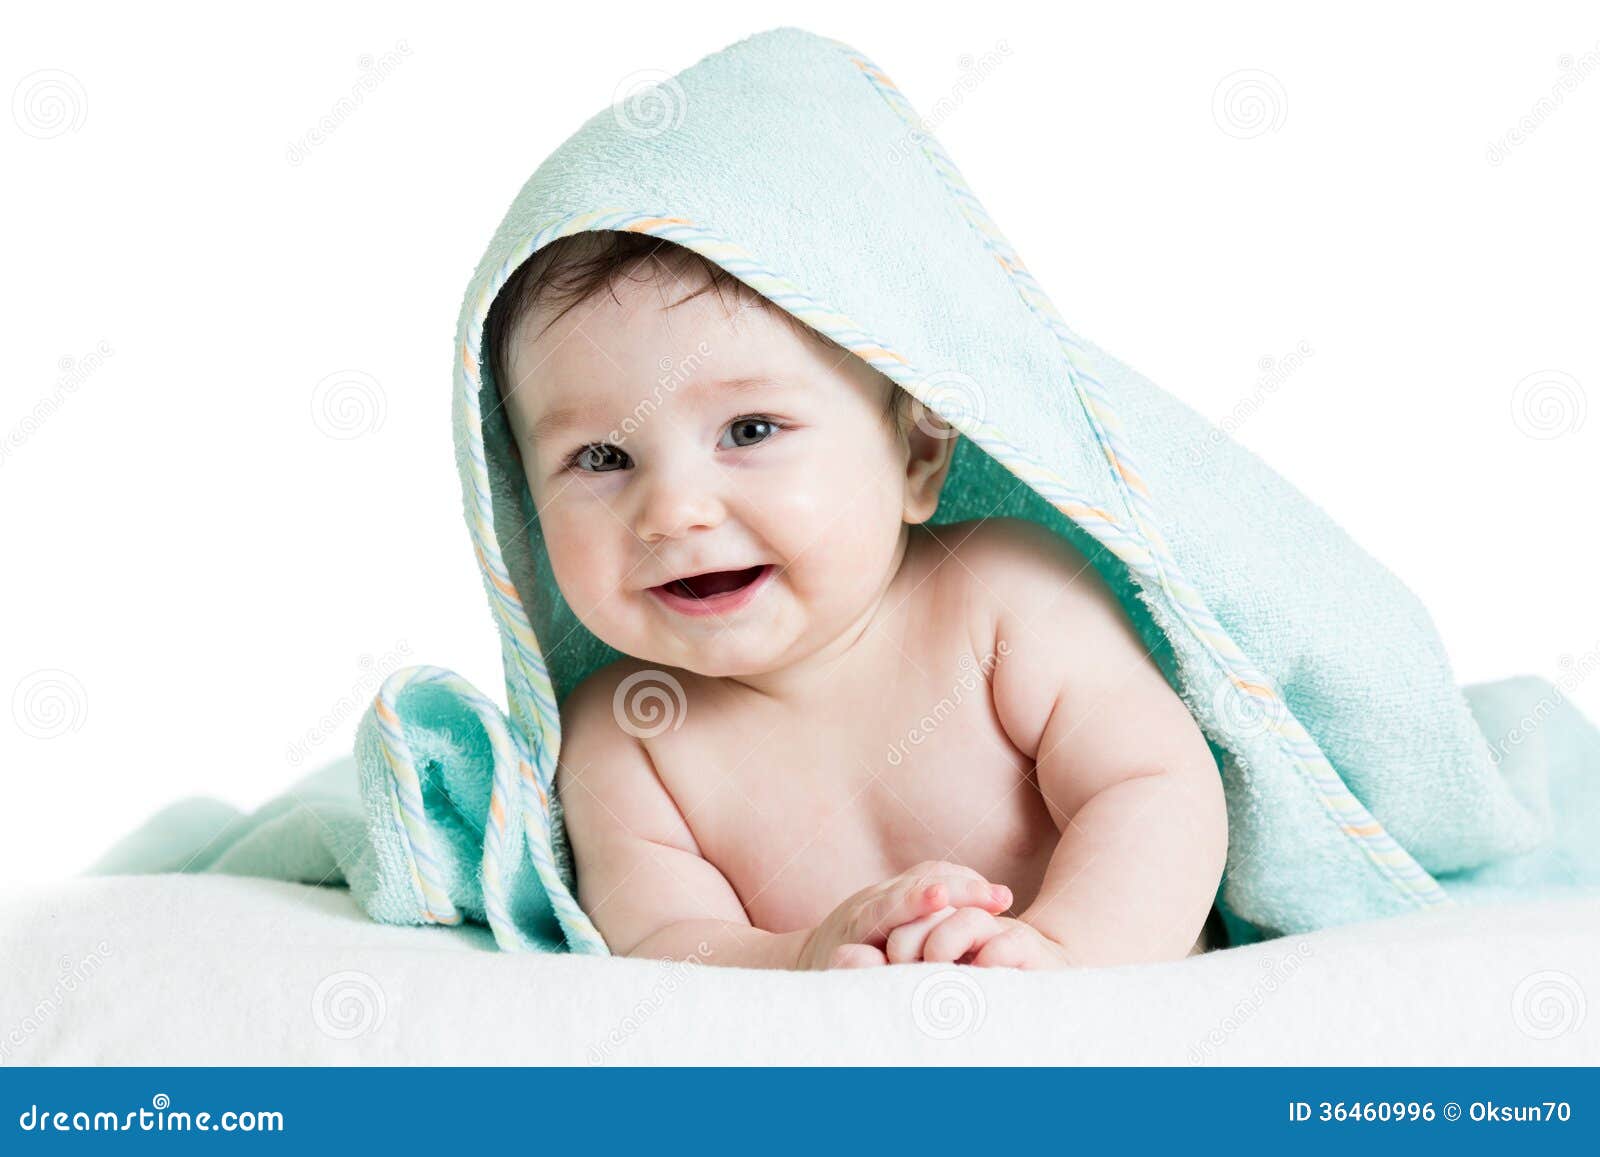 cute happy baby in towel